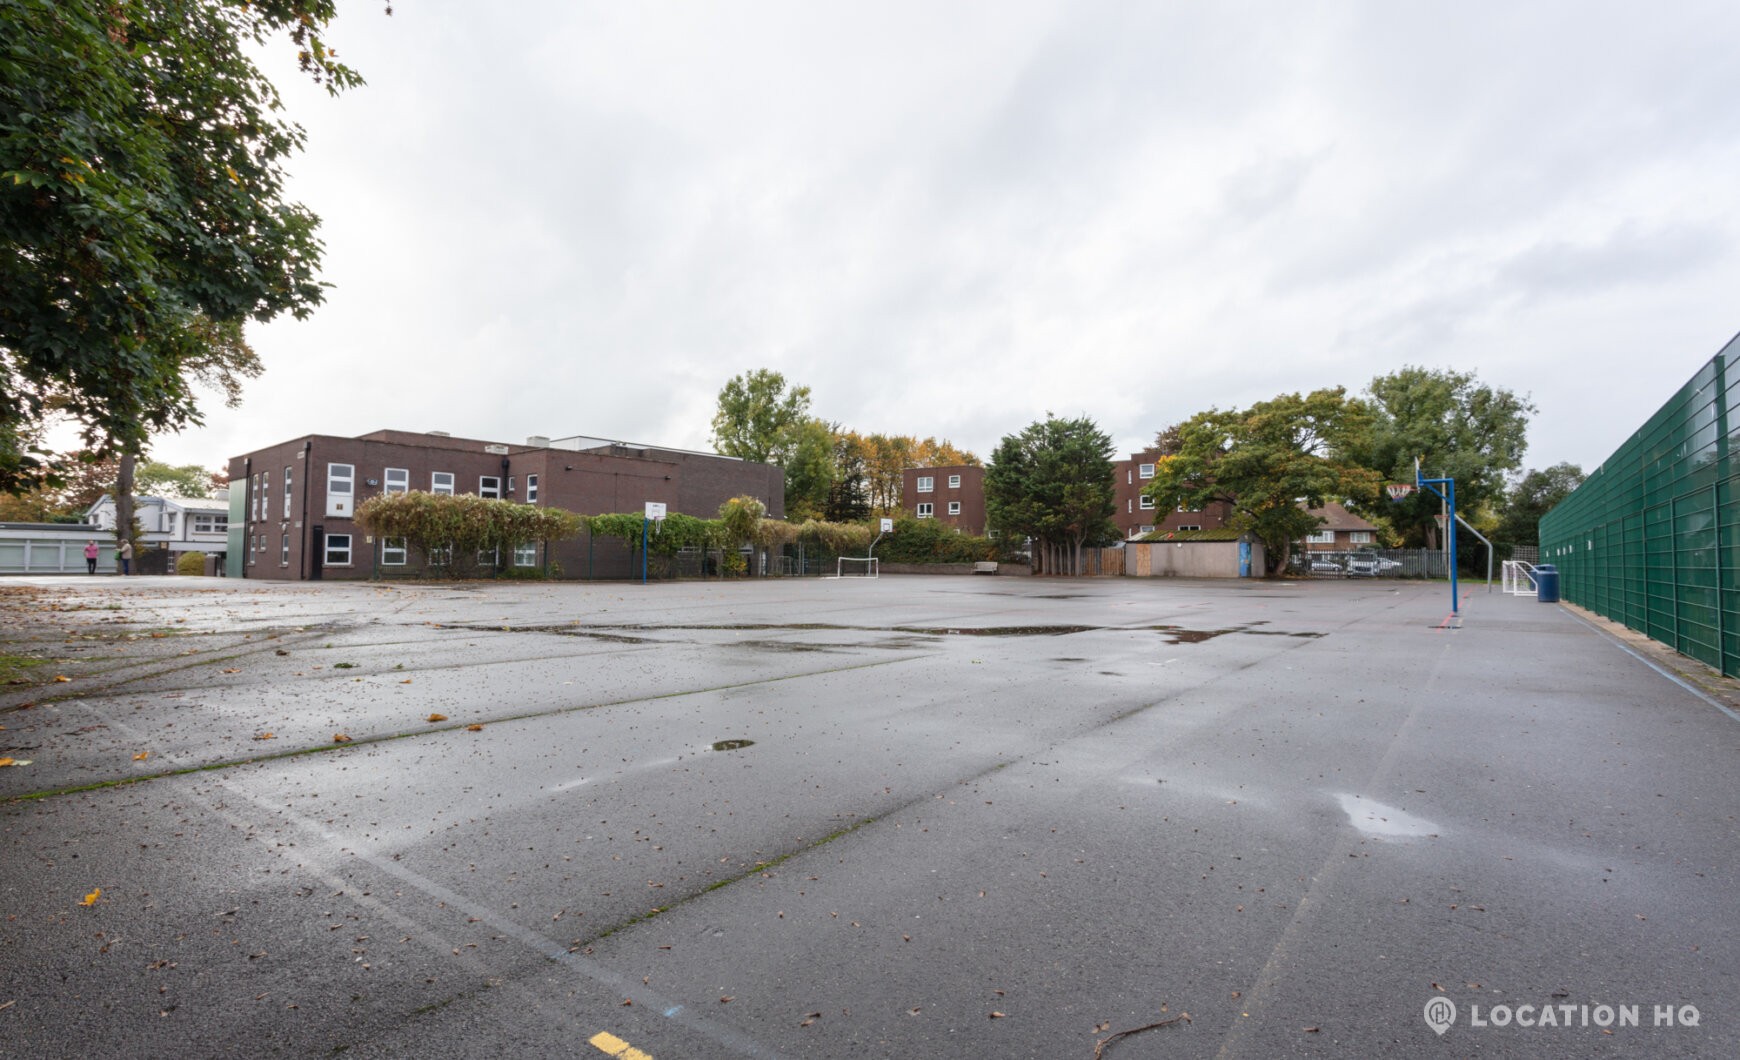 Empty school filming croydon